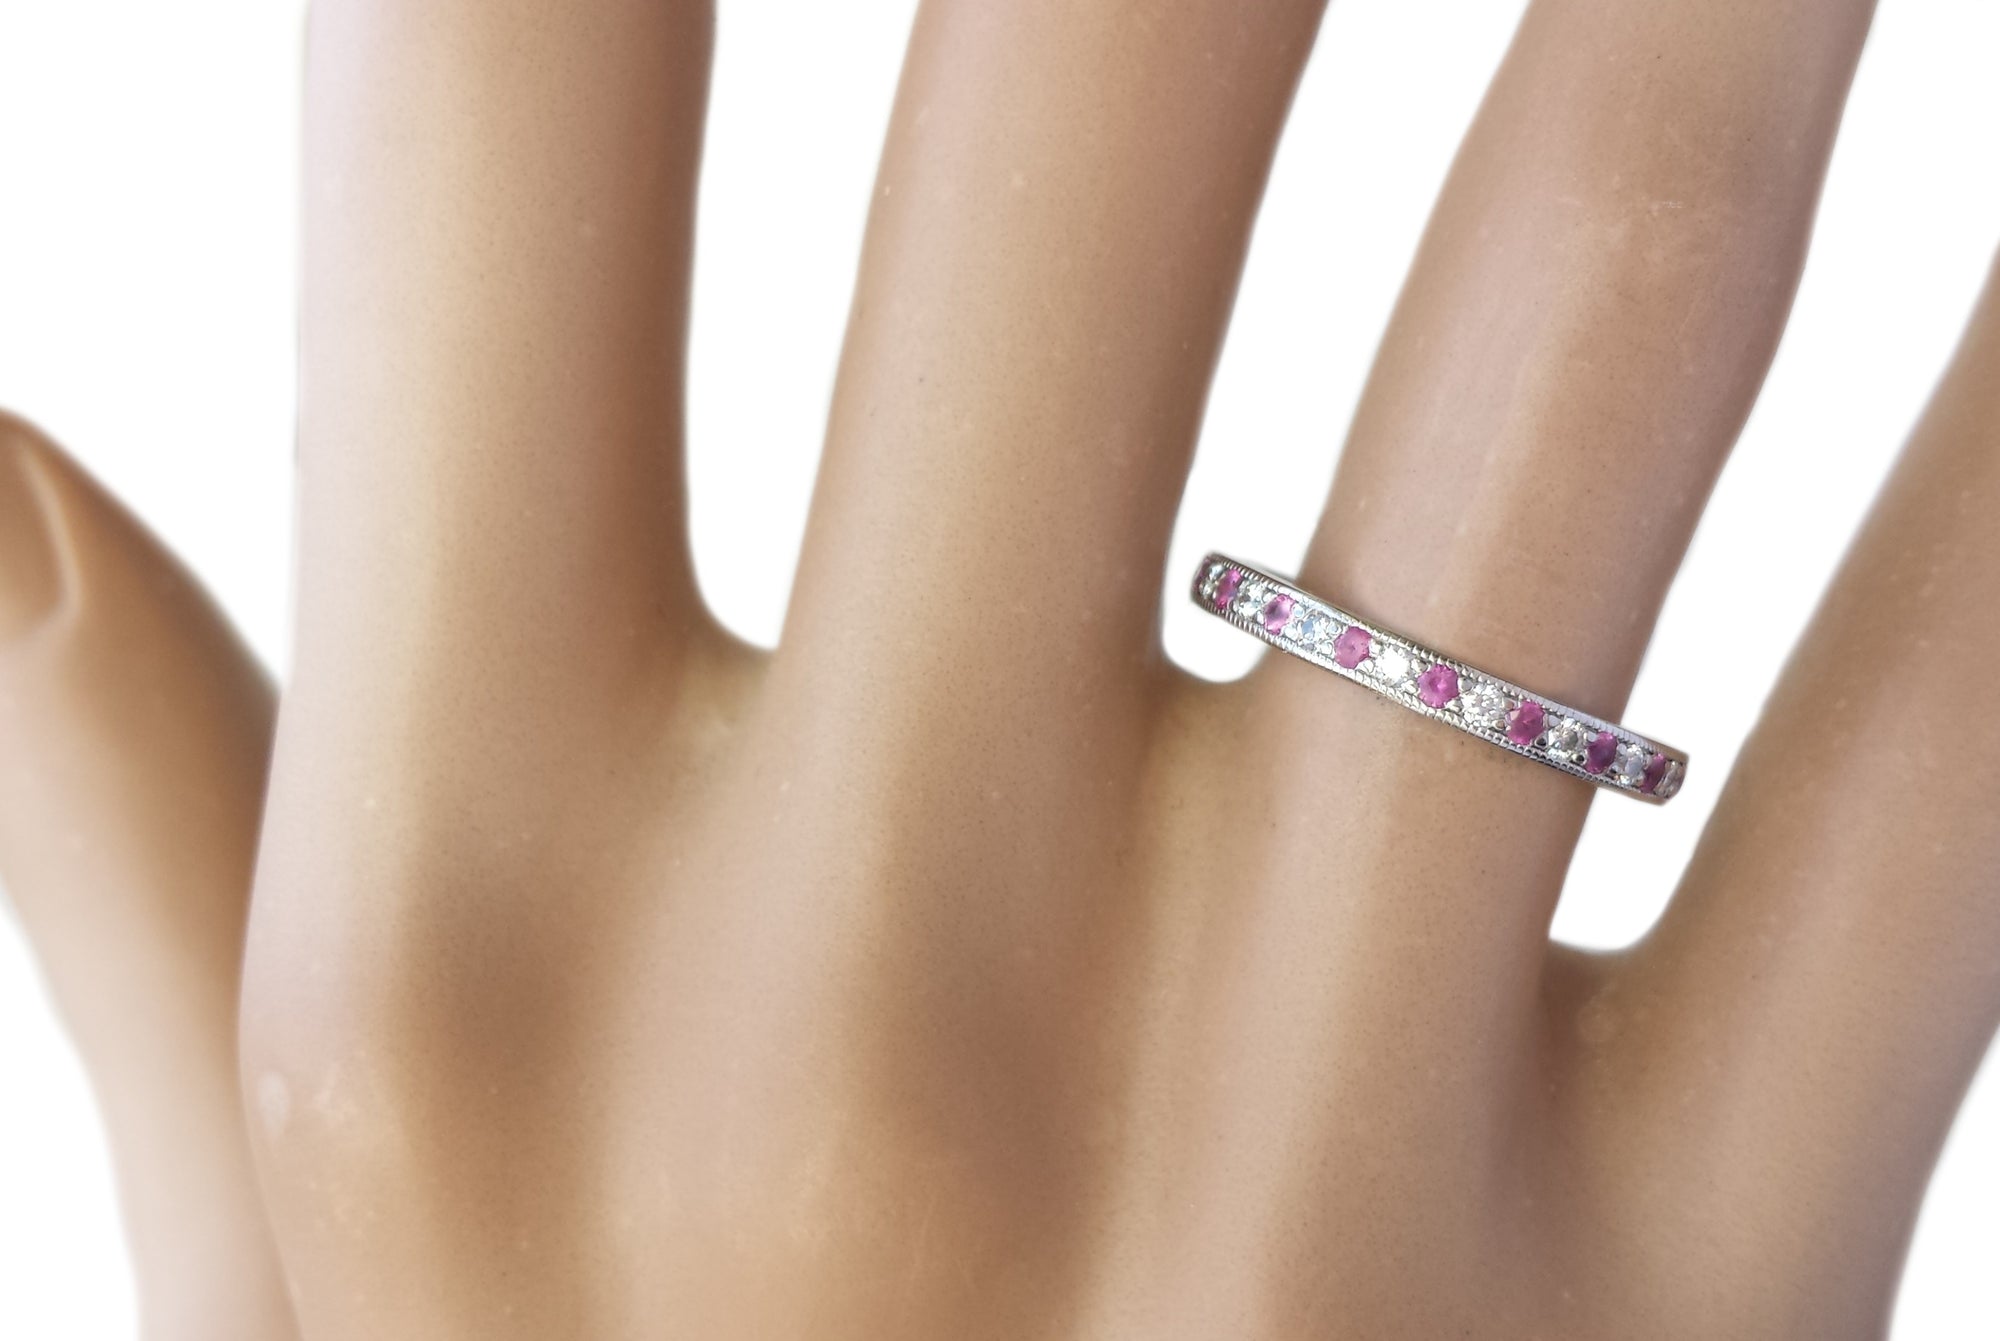 Tiffany & Co. Diamond & Pink Sapphire Legacy Ring, Size I 1/2